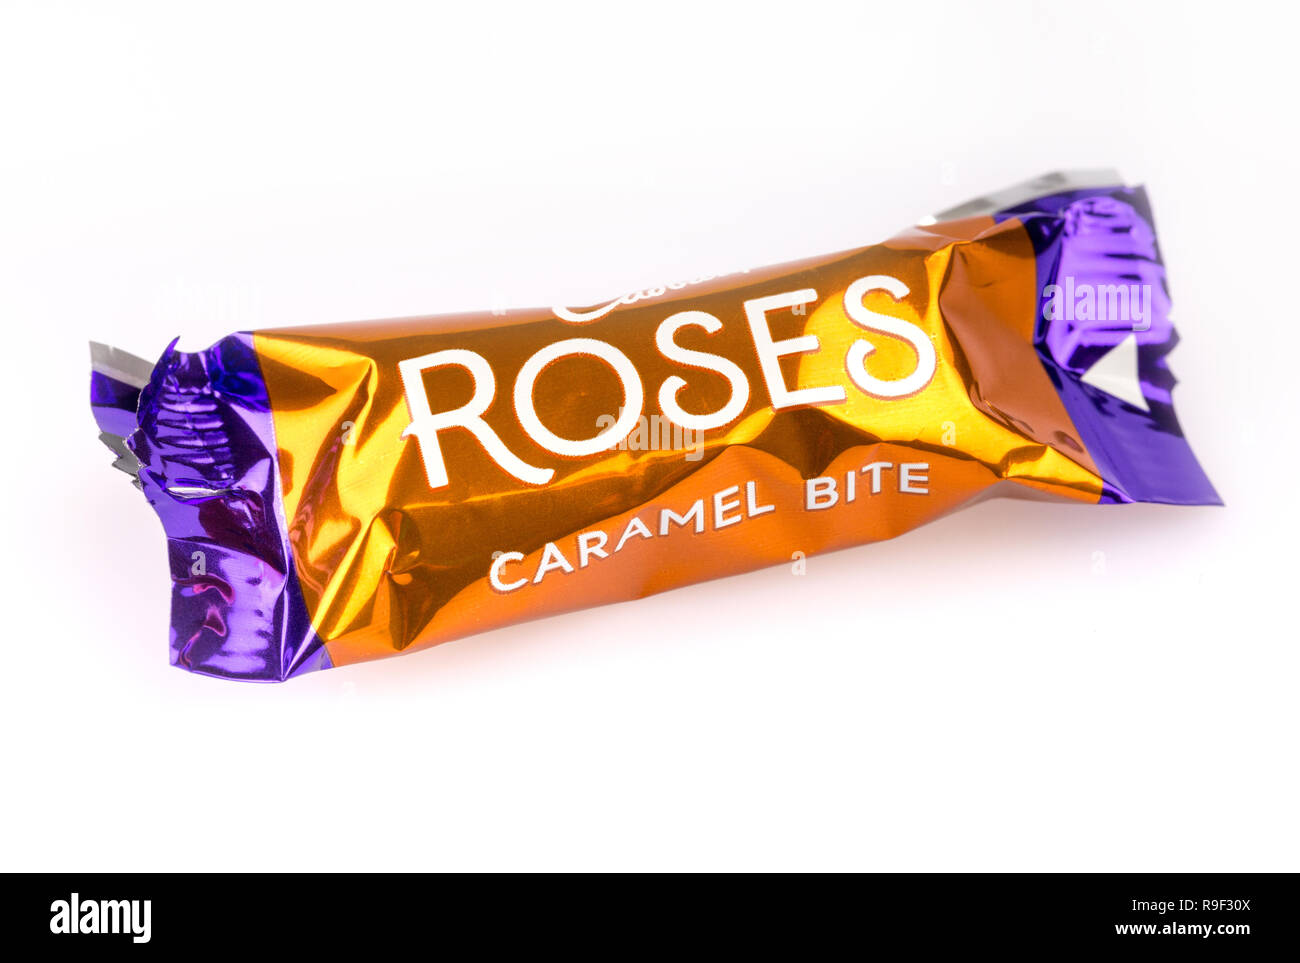 Caramel Bite cadbury's Roses chocolate on a white background Stock Photo